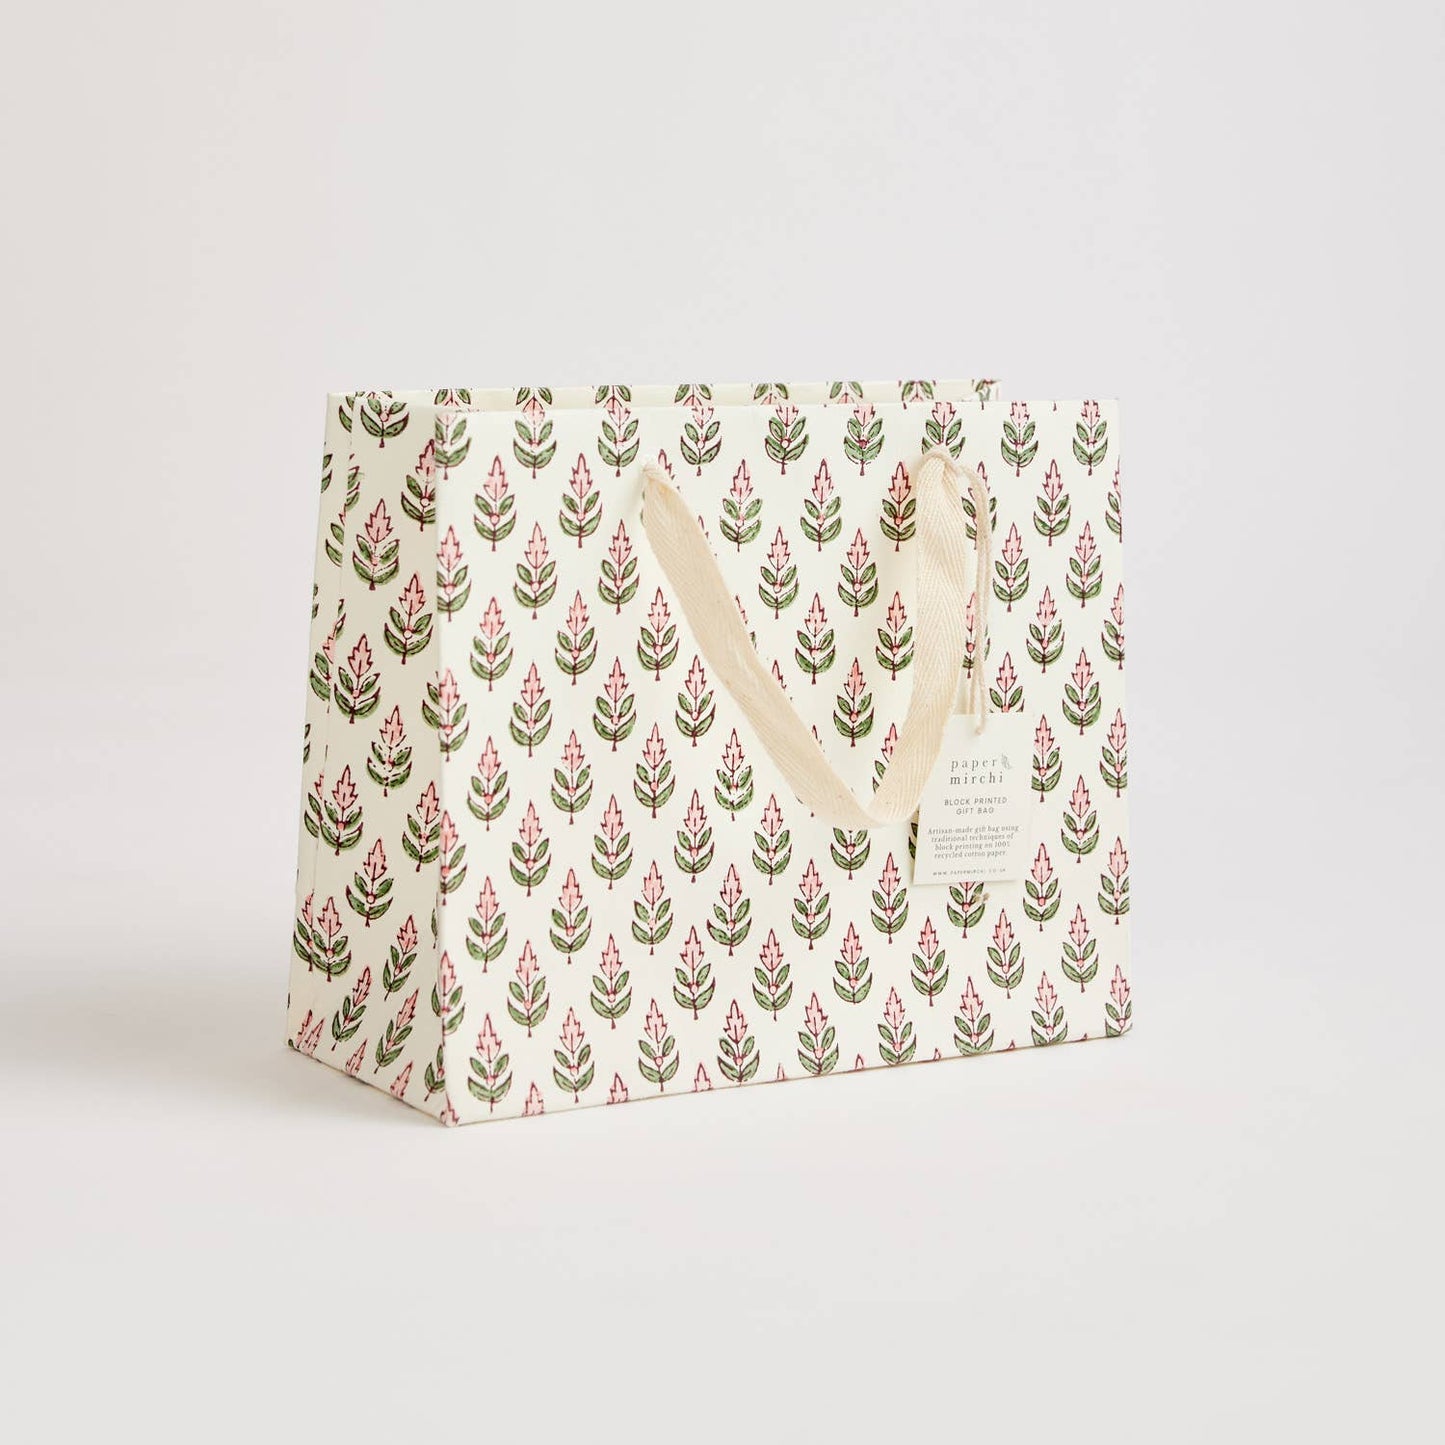 Hand Block Printed Gift Bags (Medium) - Blush By Paper Mirchi